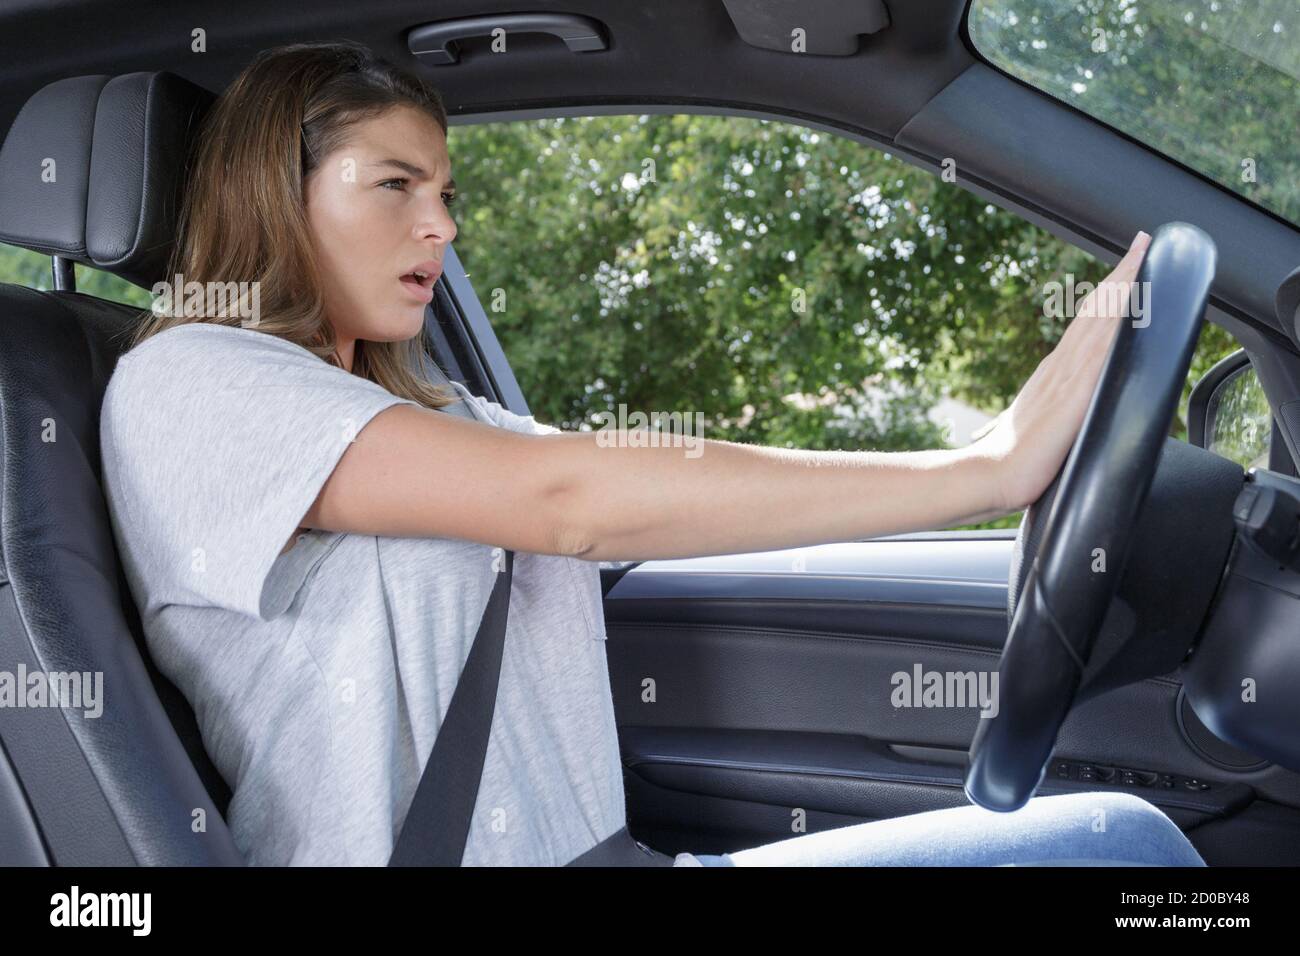 Weibliche Fahrer aggresiv bläst Auto Hupe Stockfotografie - Alamy